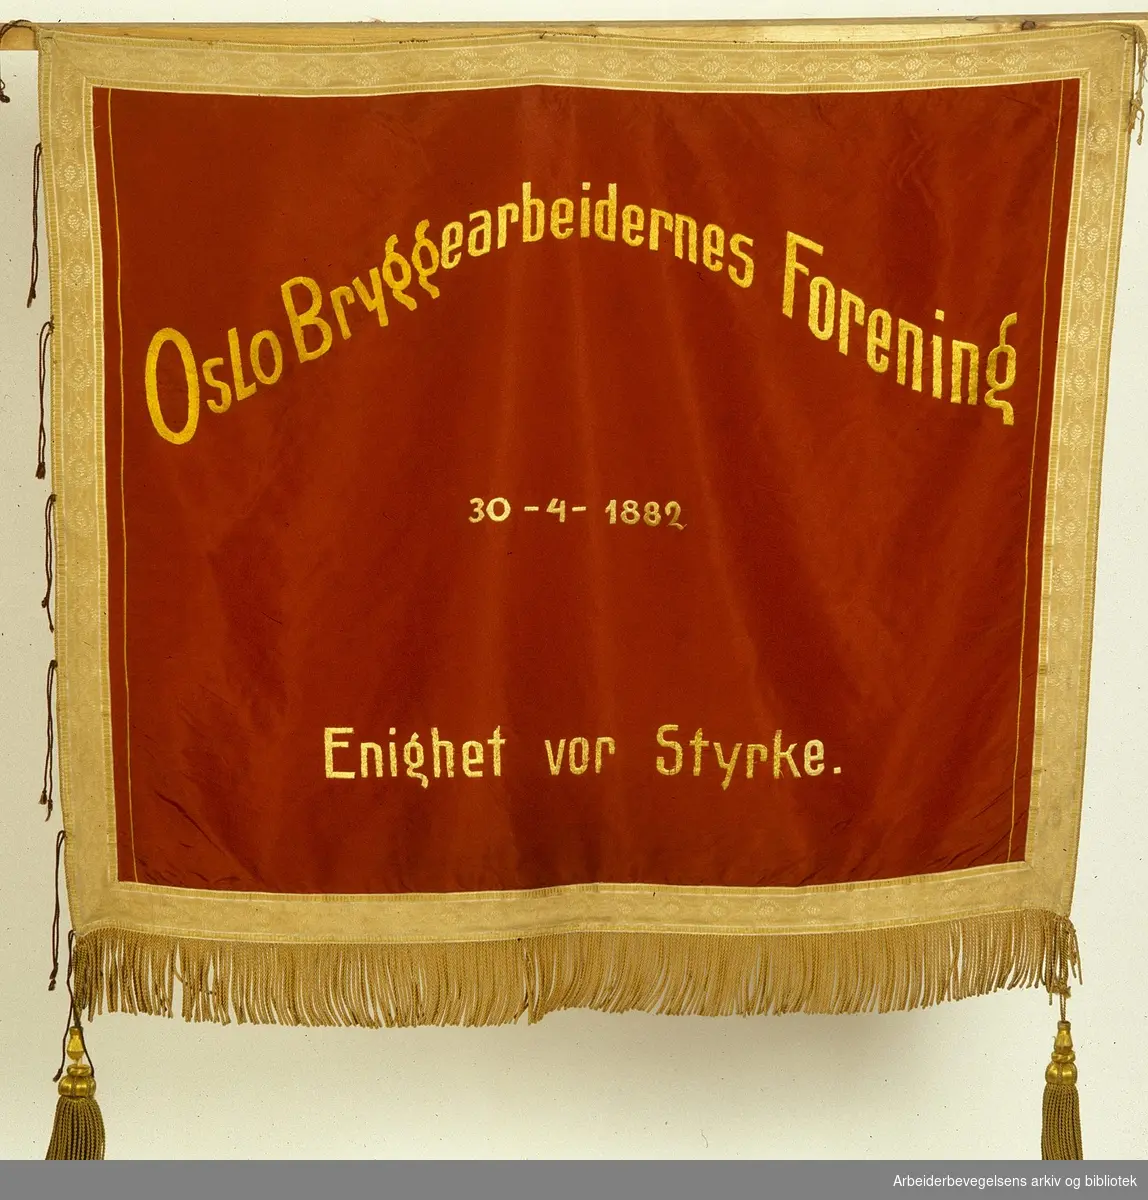 Oslo bryggearbeideres forening.stiftet 30. april 1882..Forside..Fanetekst: Oslo Bryggearbeidernes forening.30 - 4 - 1882. .Enighet vor Styrke...